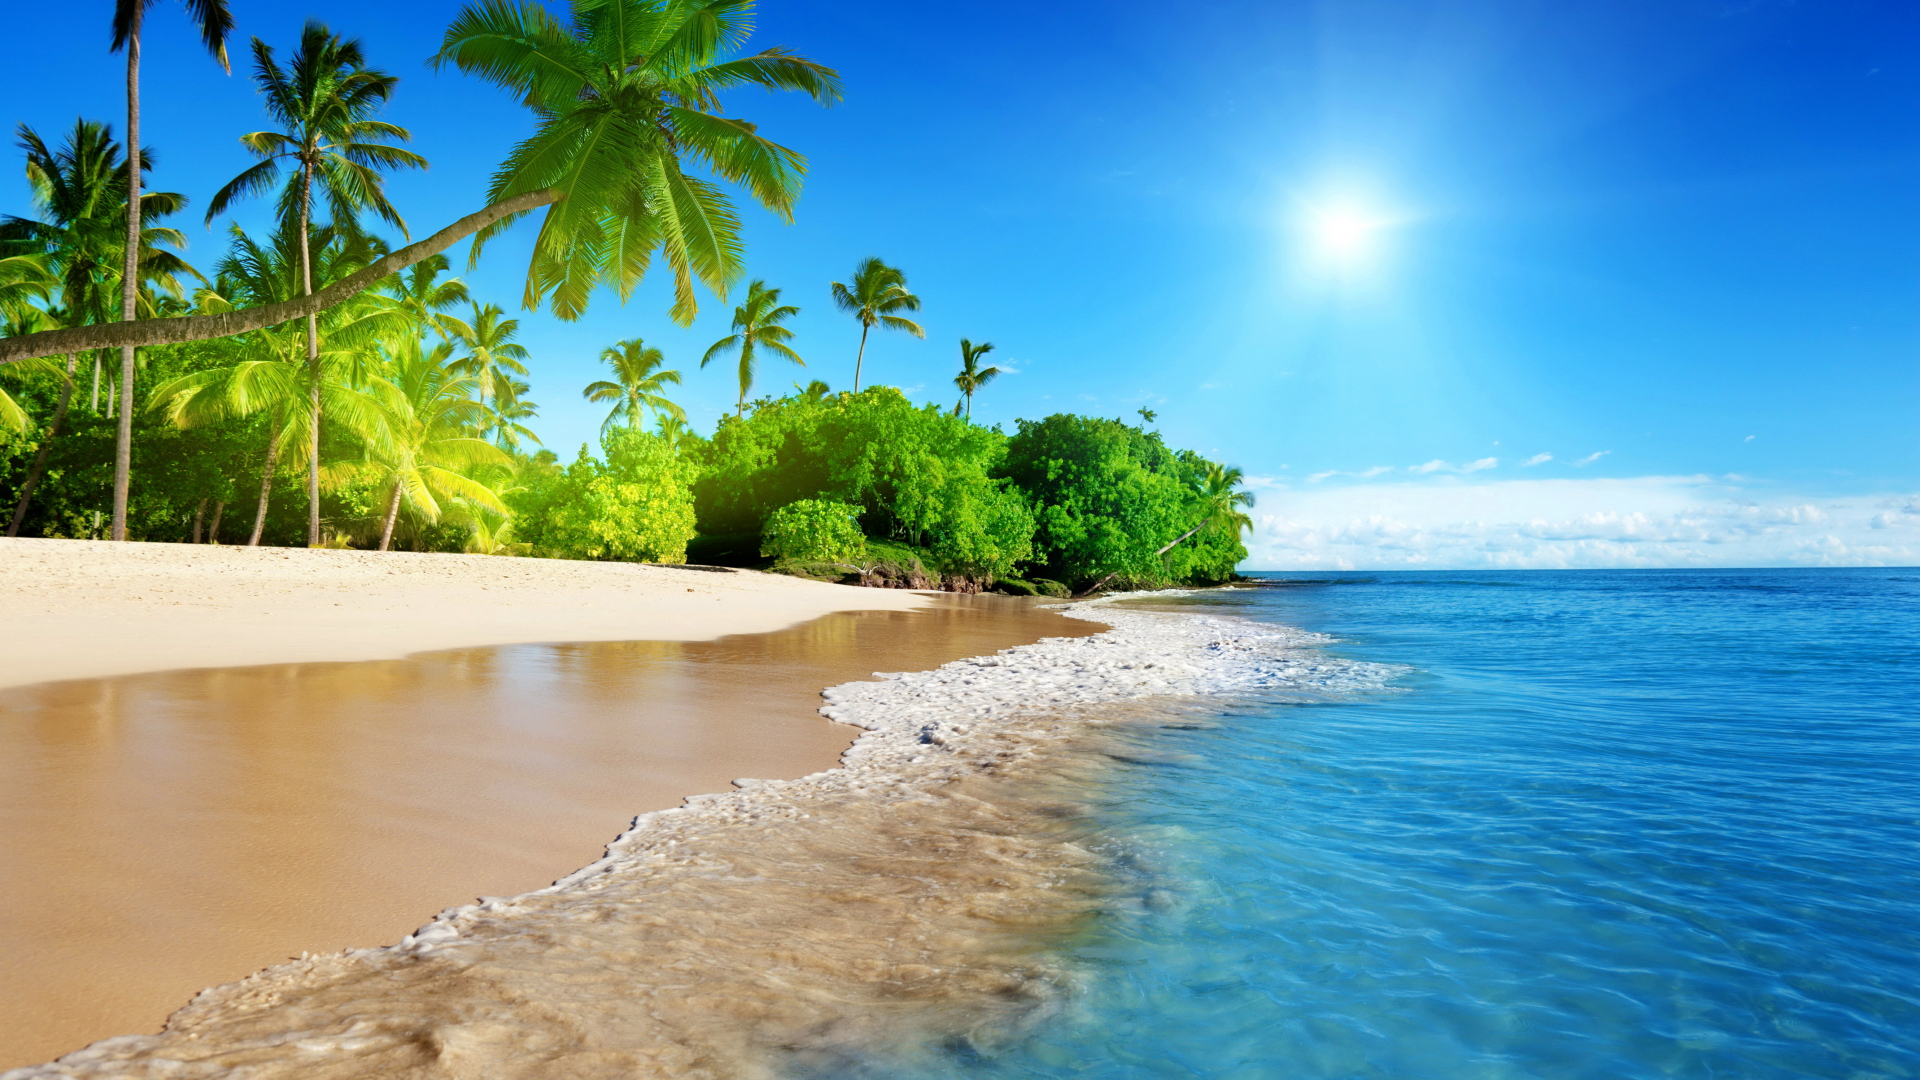 Download Wallpaper 1920x1080 Tropical Beach Sea Calm Sunny Day Holiday Full Hd Hdtv Fhd